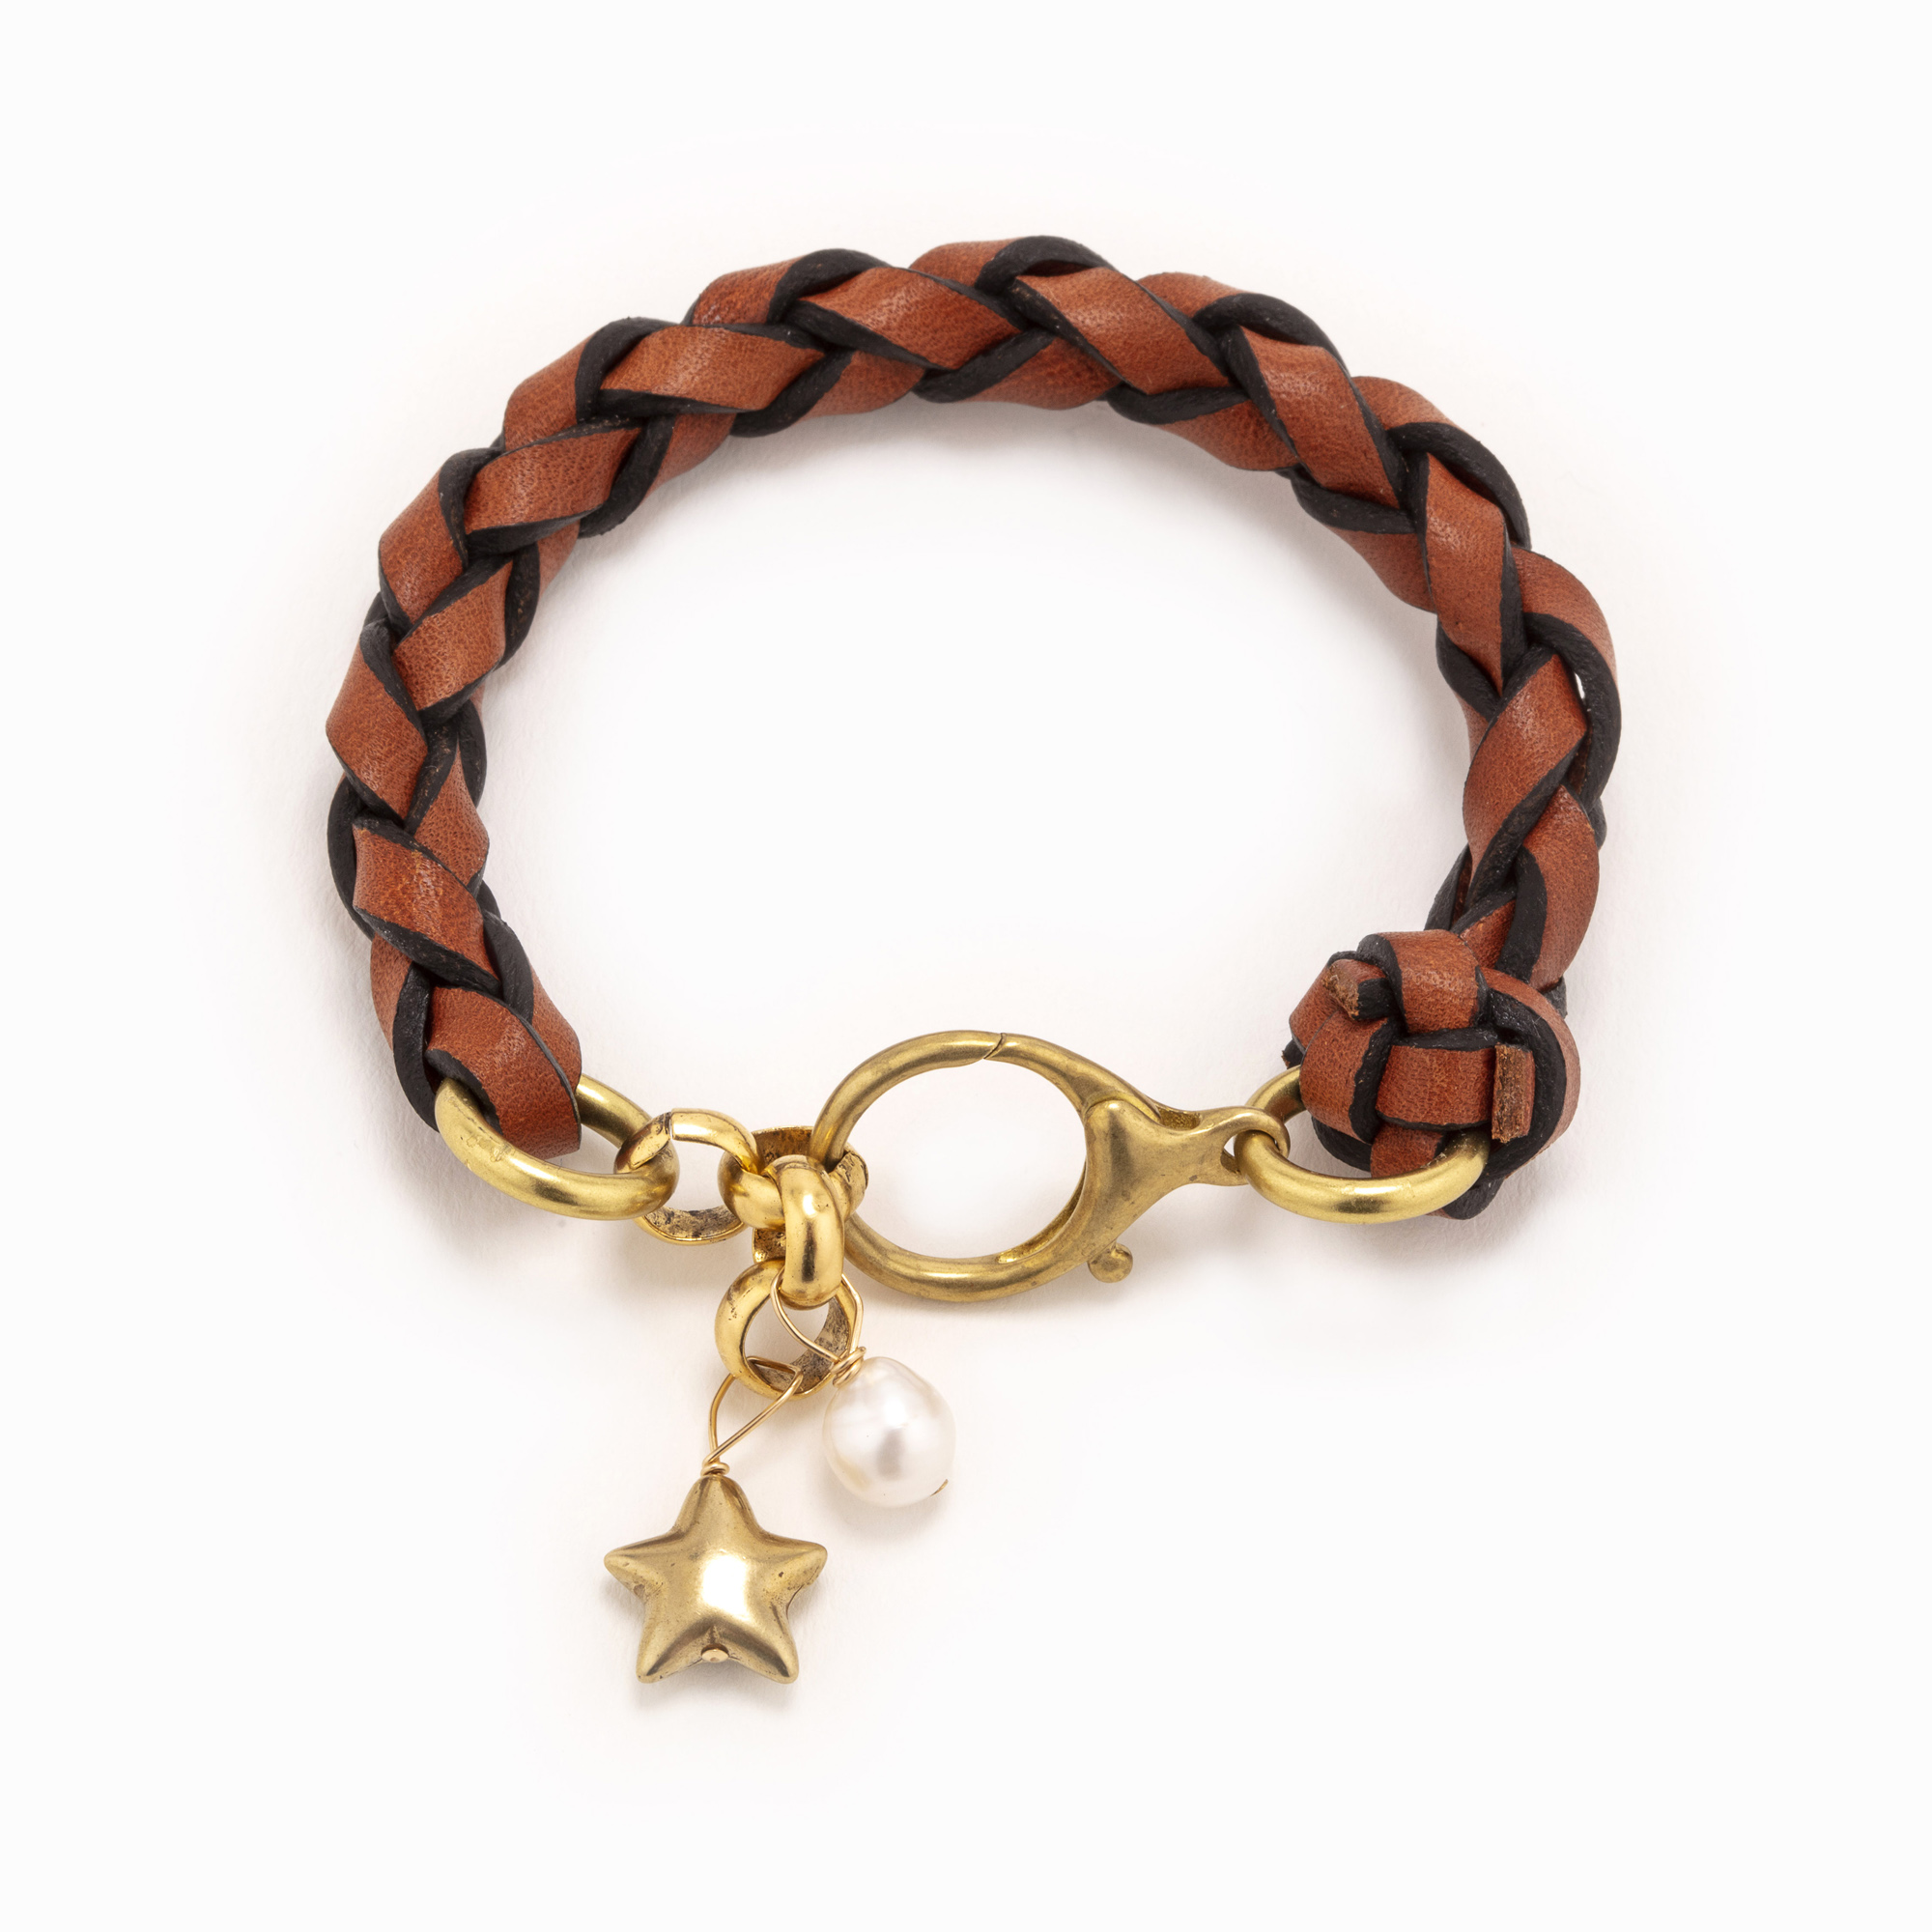 Featured image for “Bosco Italian Leather Bracelet”